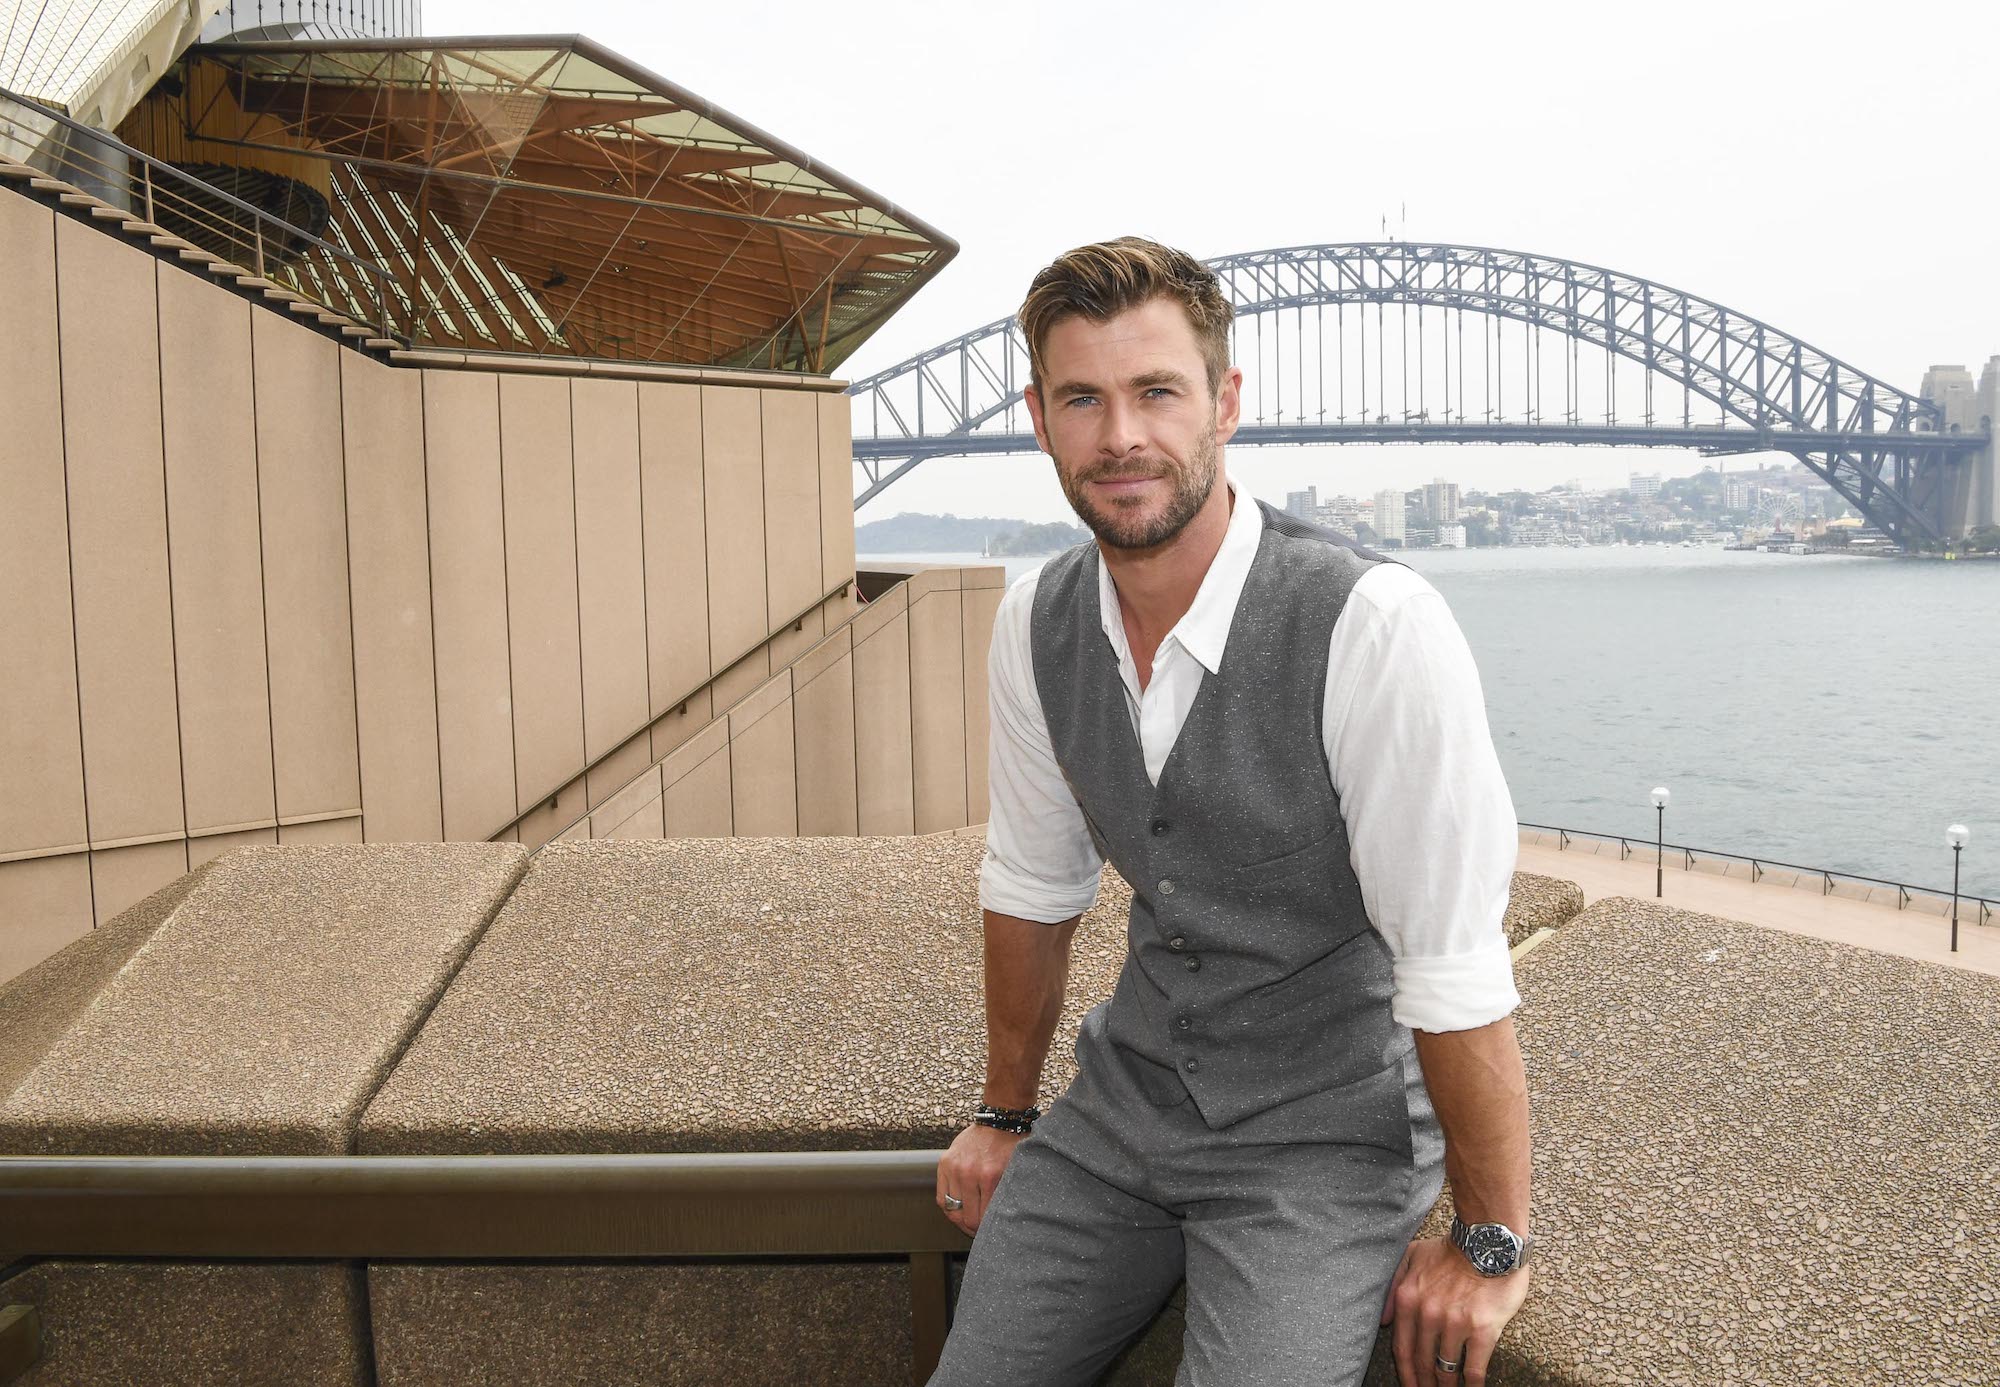 Chris Hemsworth smiling in front of a bridge